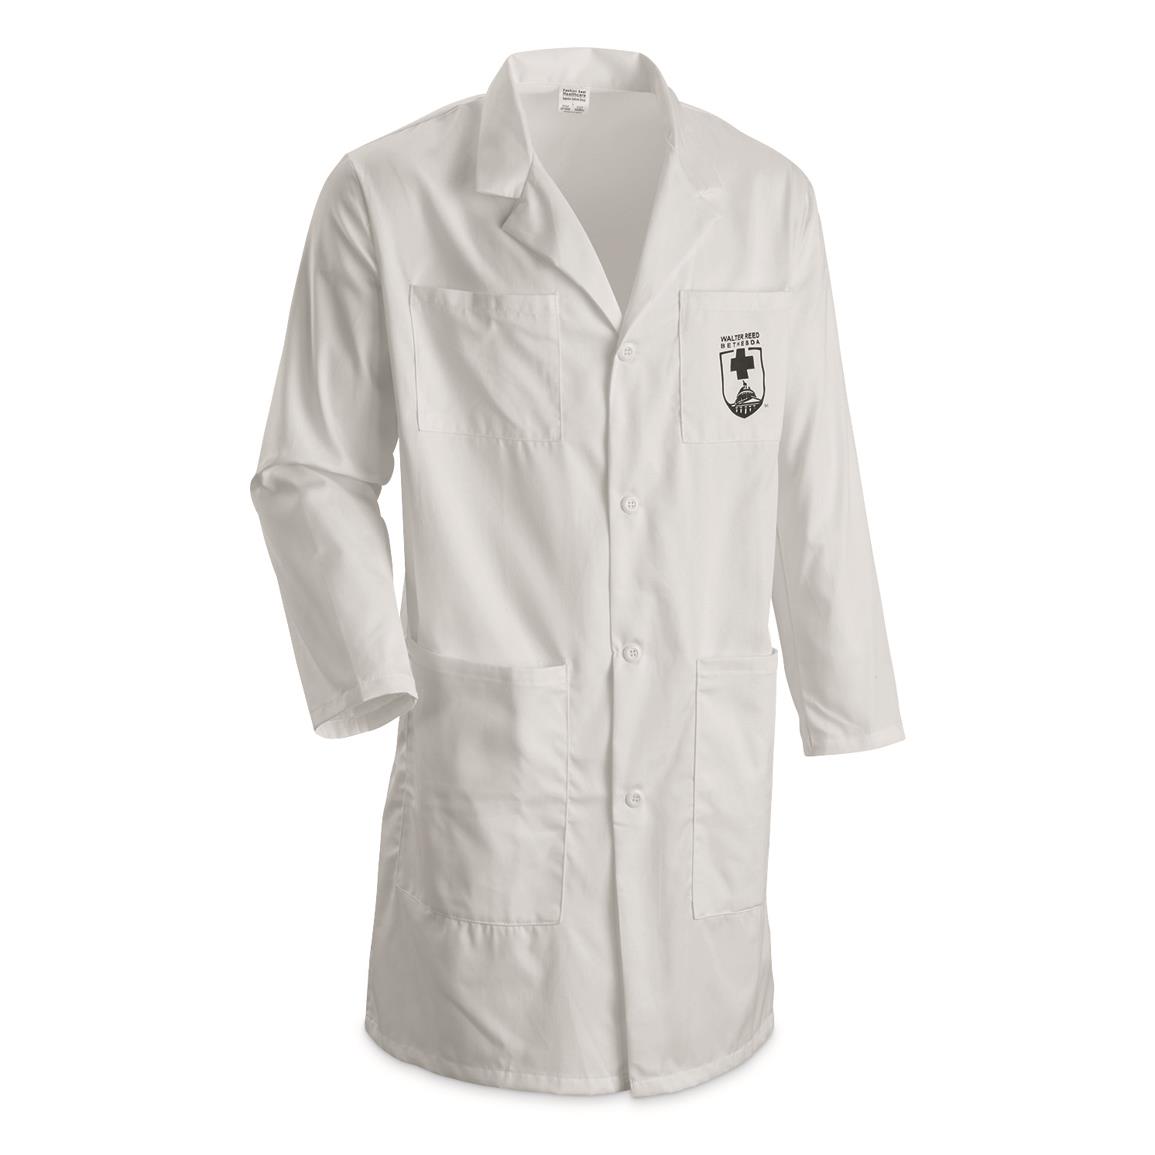 Military Walter Reed Hospital Lab Coats 2 Pack Like New Surplus U.S